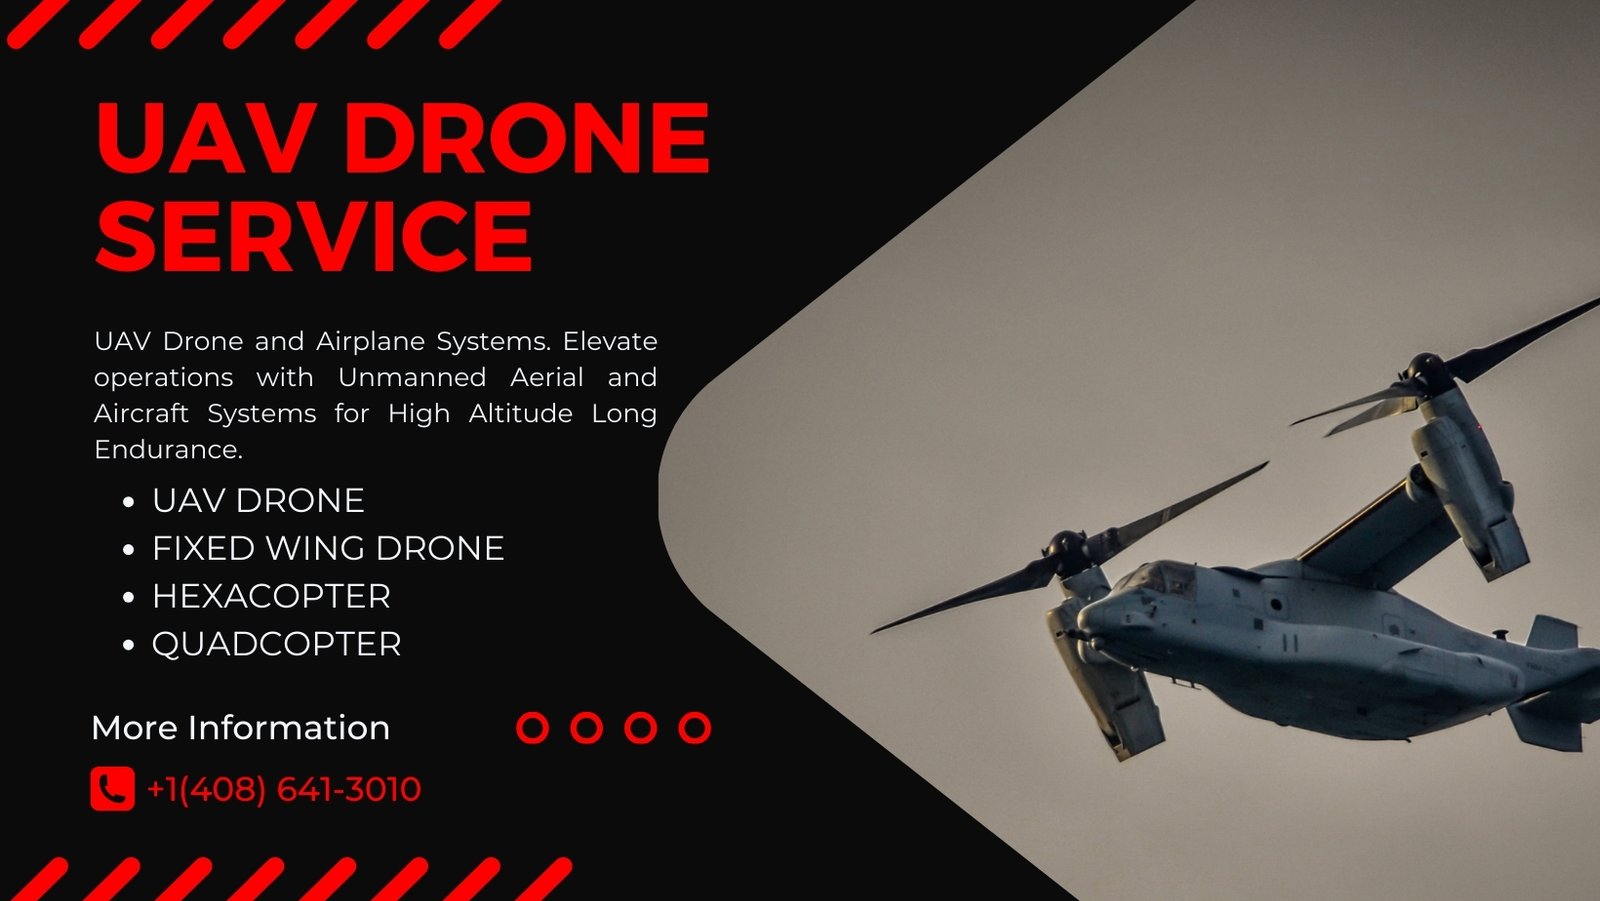 Explore Long-Range UAV Innovation: Drone Airplane Technology